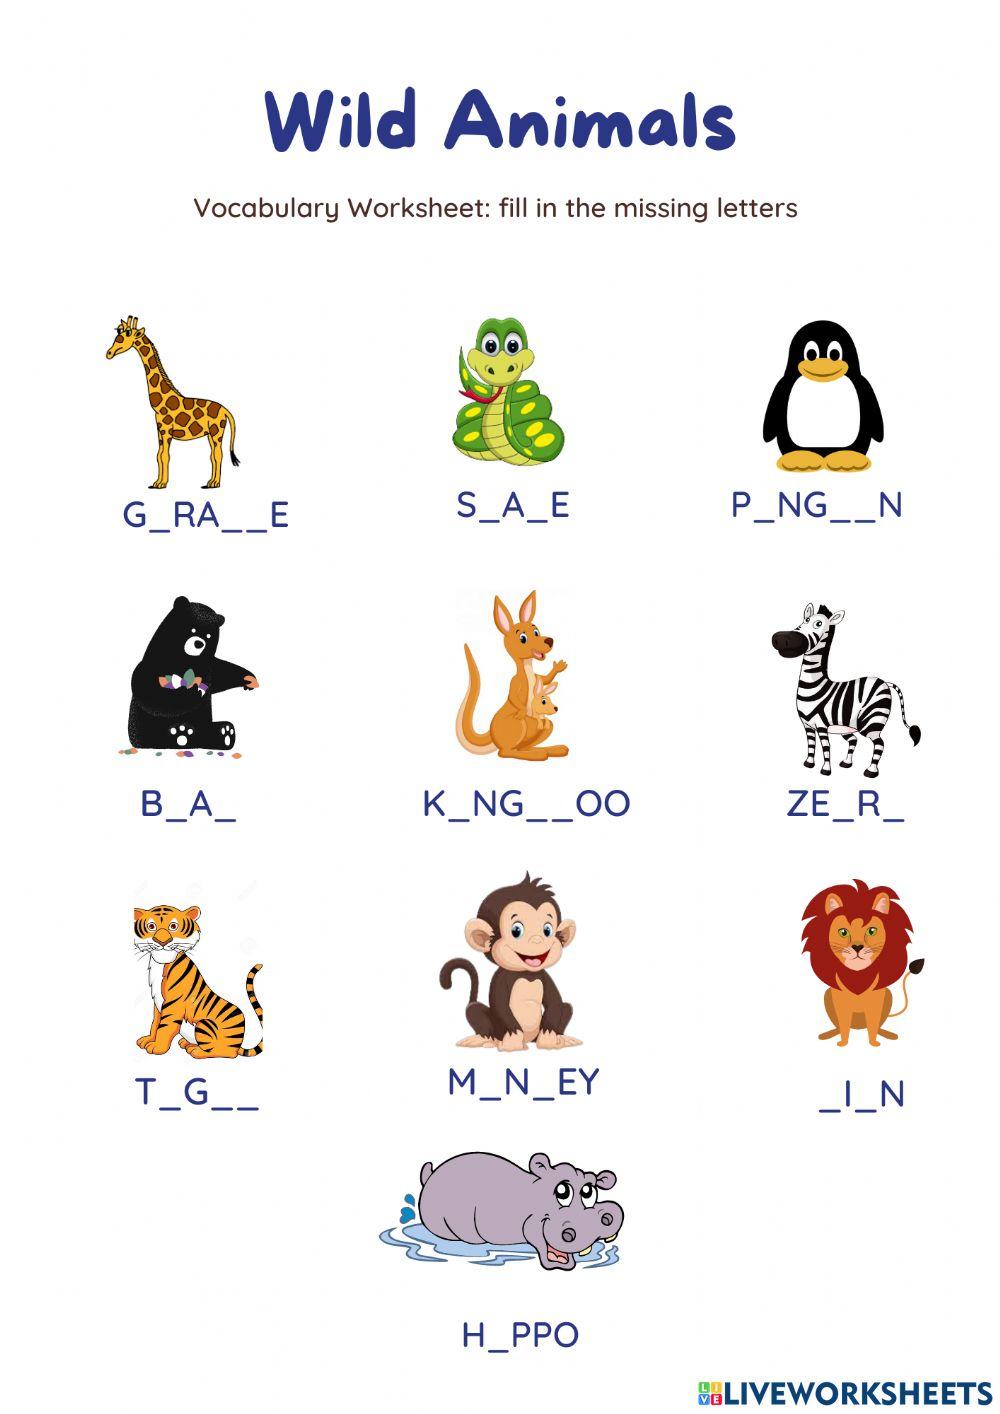 Wild animals - spelling